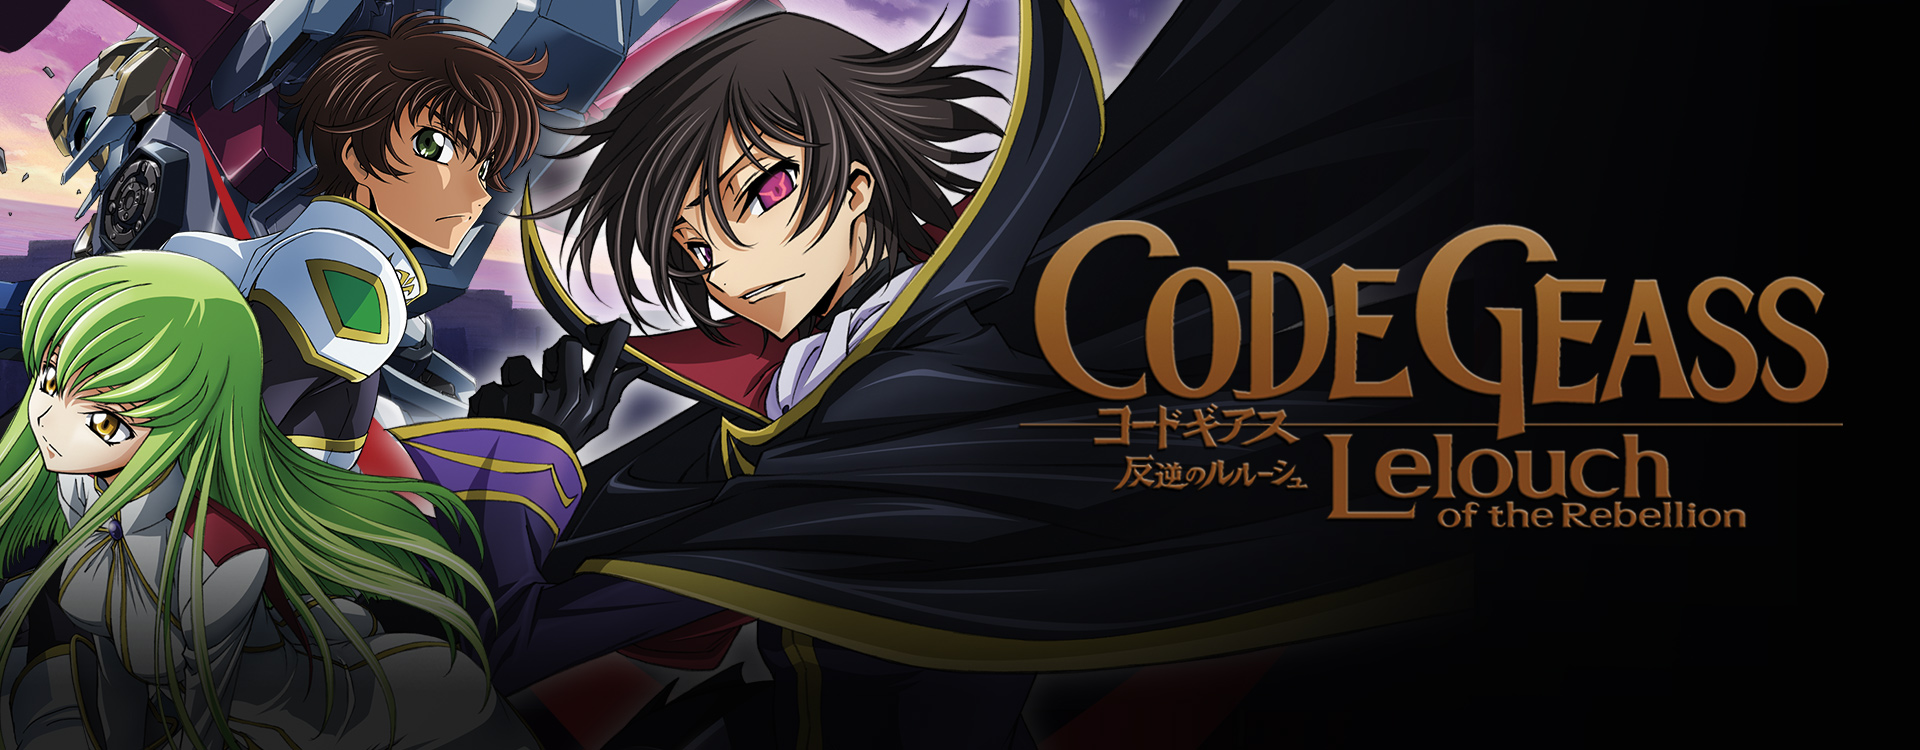 Code Geass Director Goro Taniguchi Shares Inspiration Behind Anime